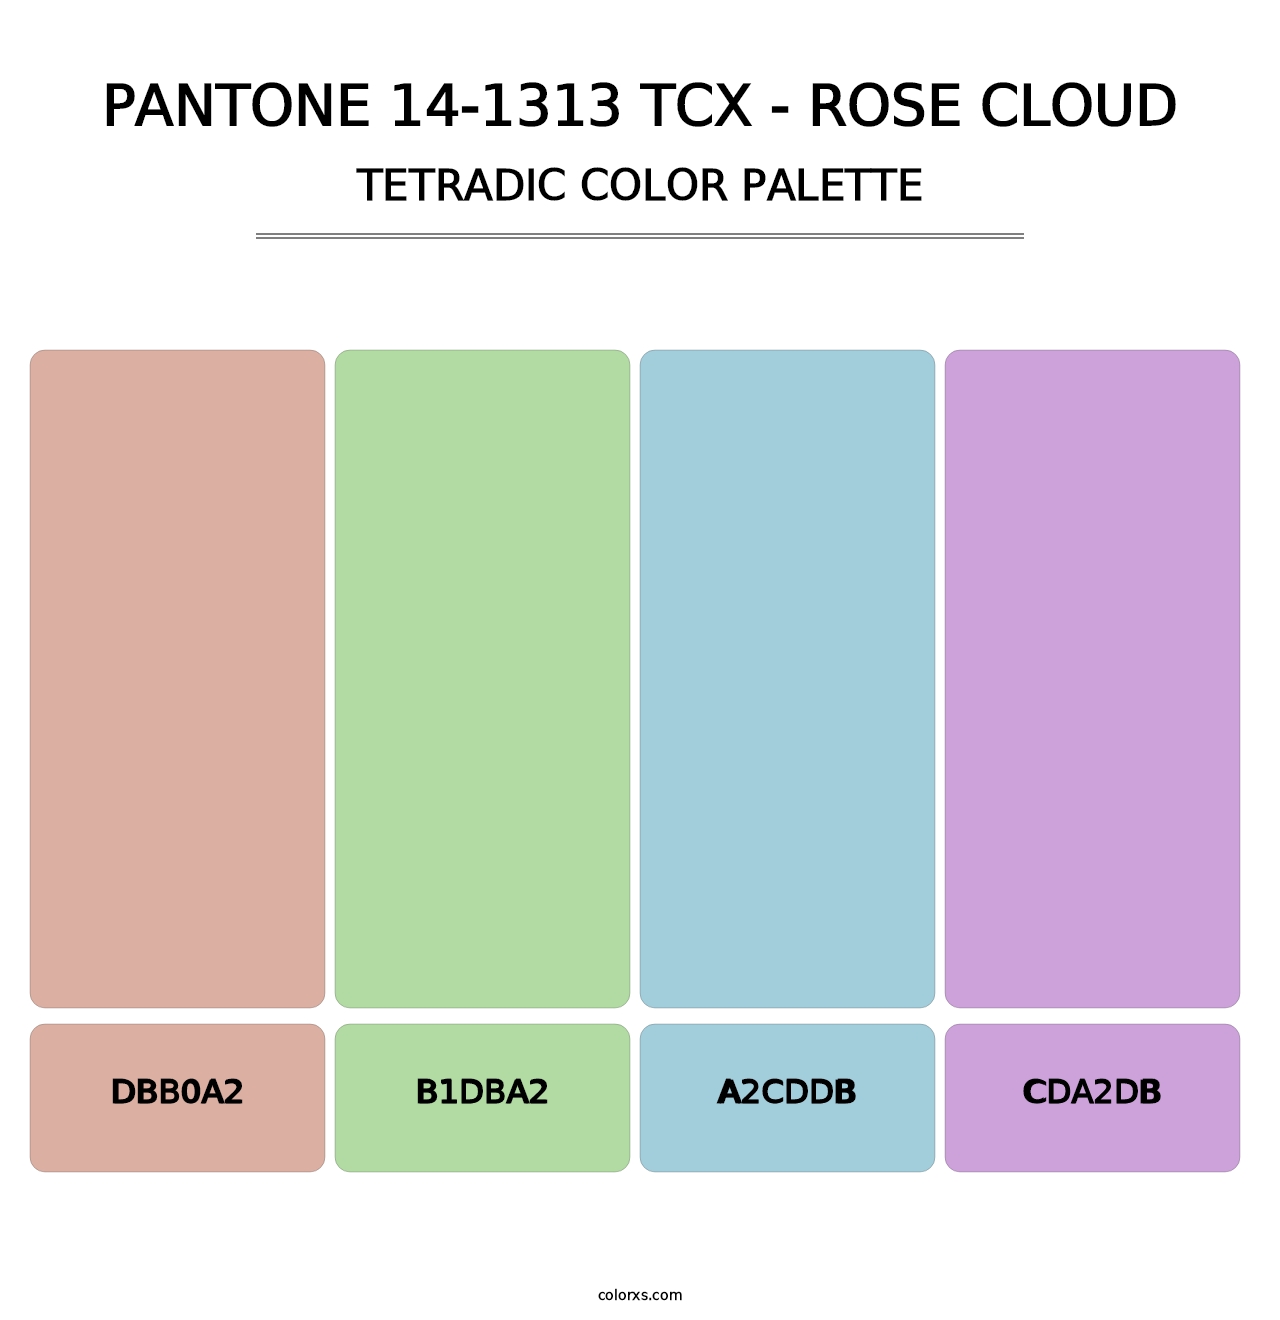 PANTONE 14-1313 TCX - Rose Cloud - Tetradic Color Palette